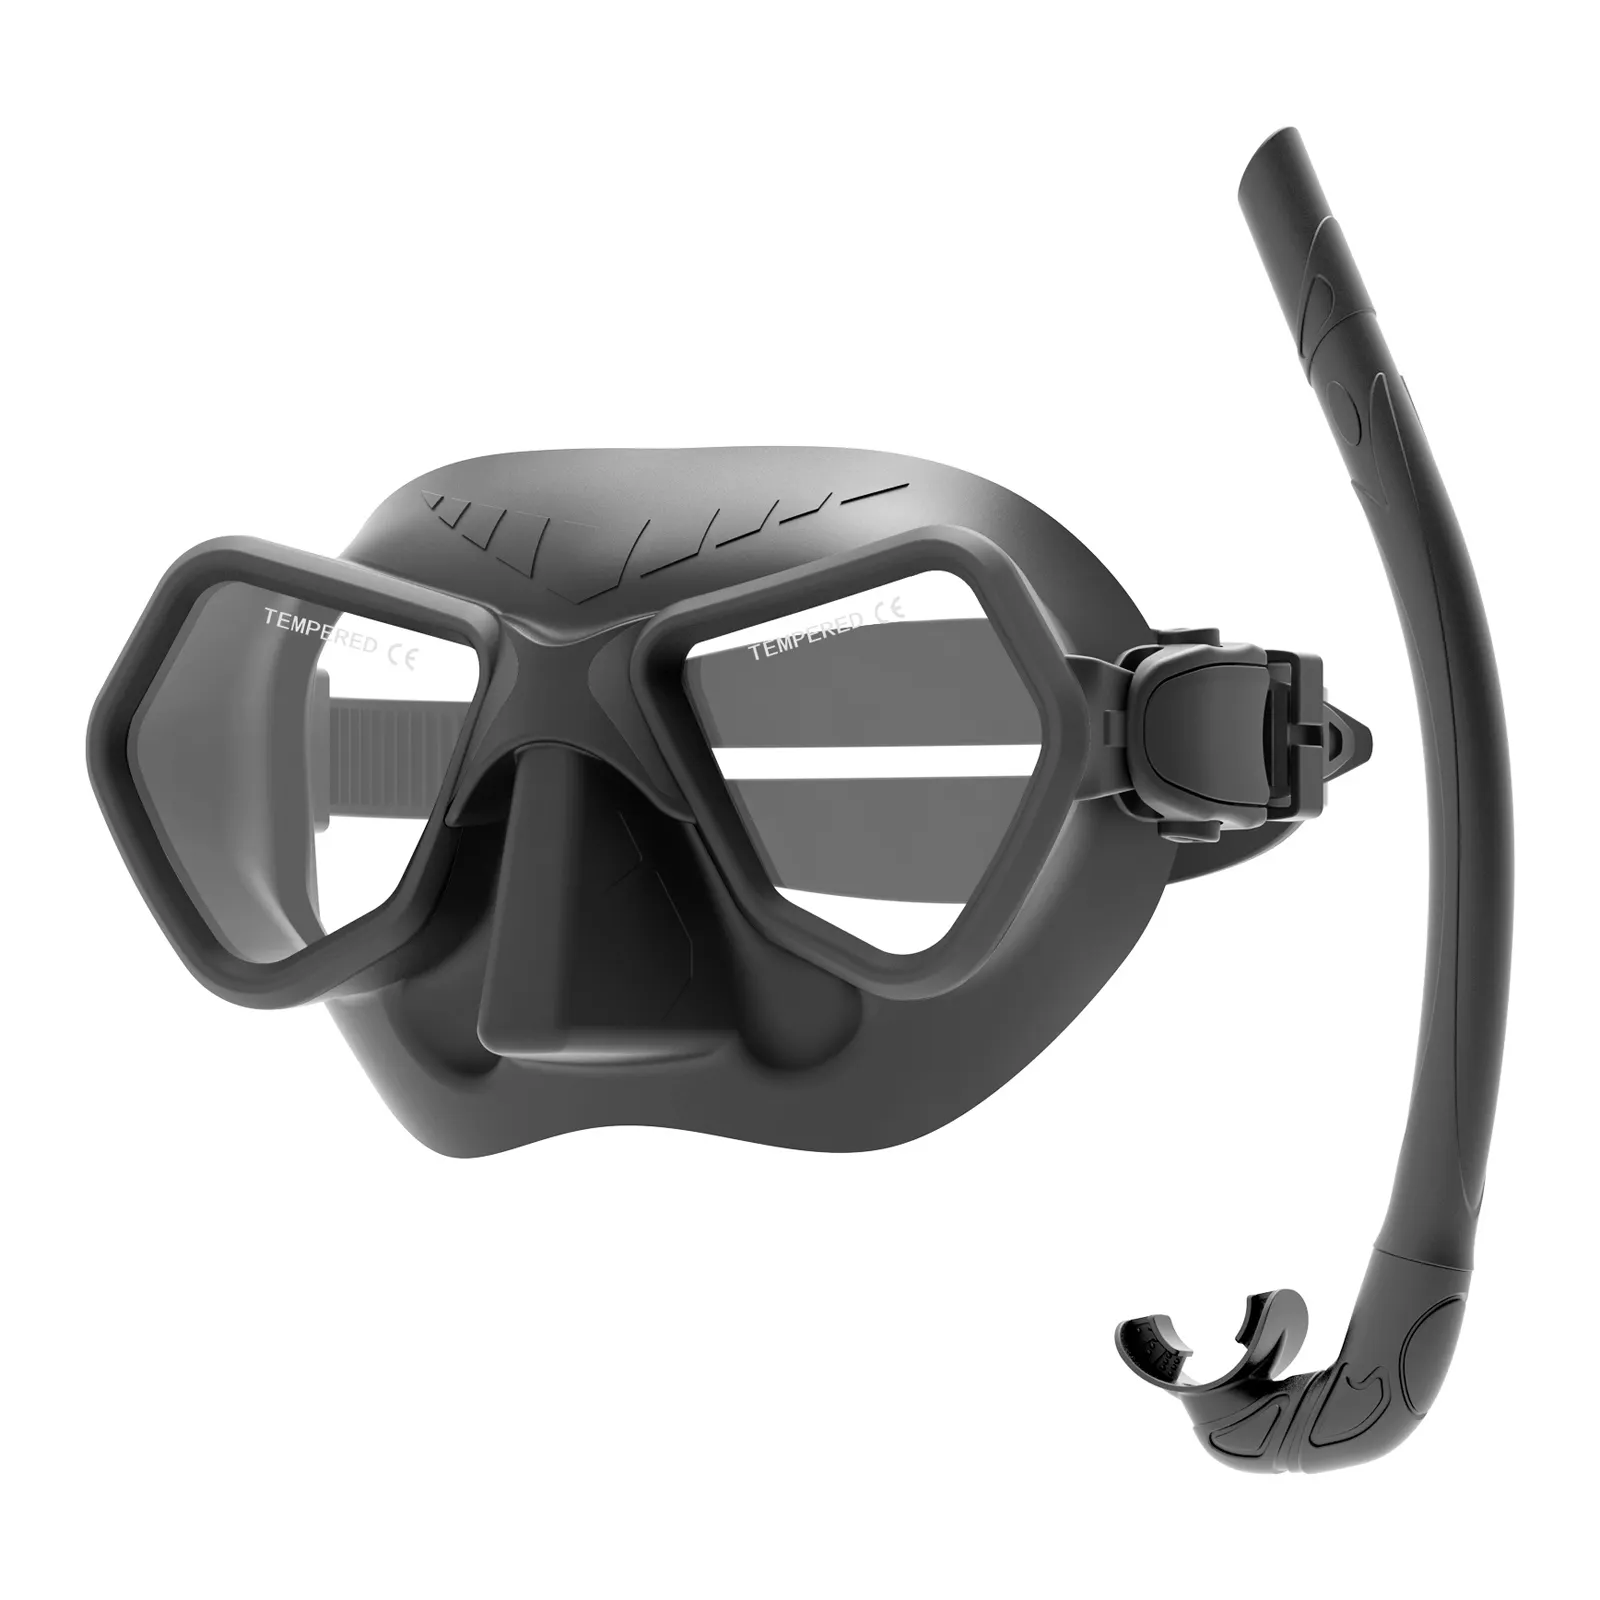 ZMZ Kit de esnórquel profesional Gafas de buceo de silicona snorkel Kit de buceo libre